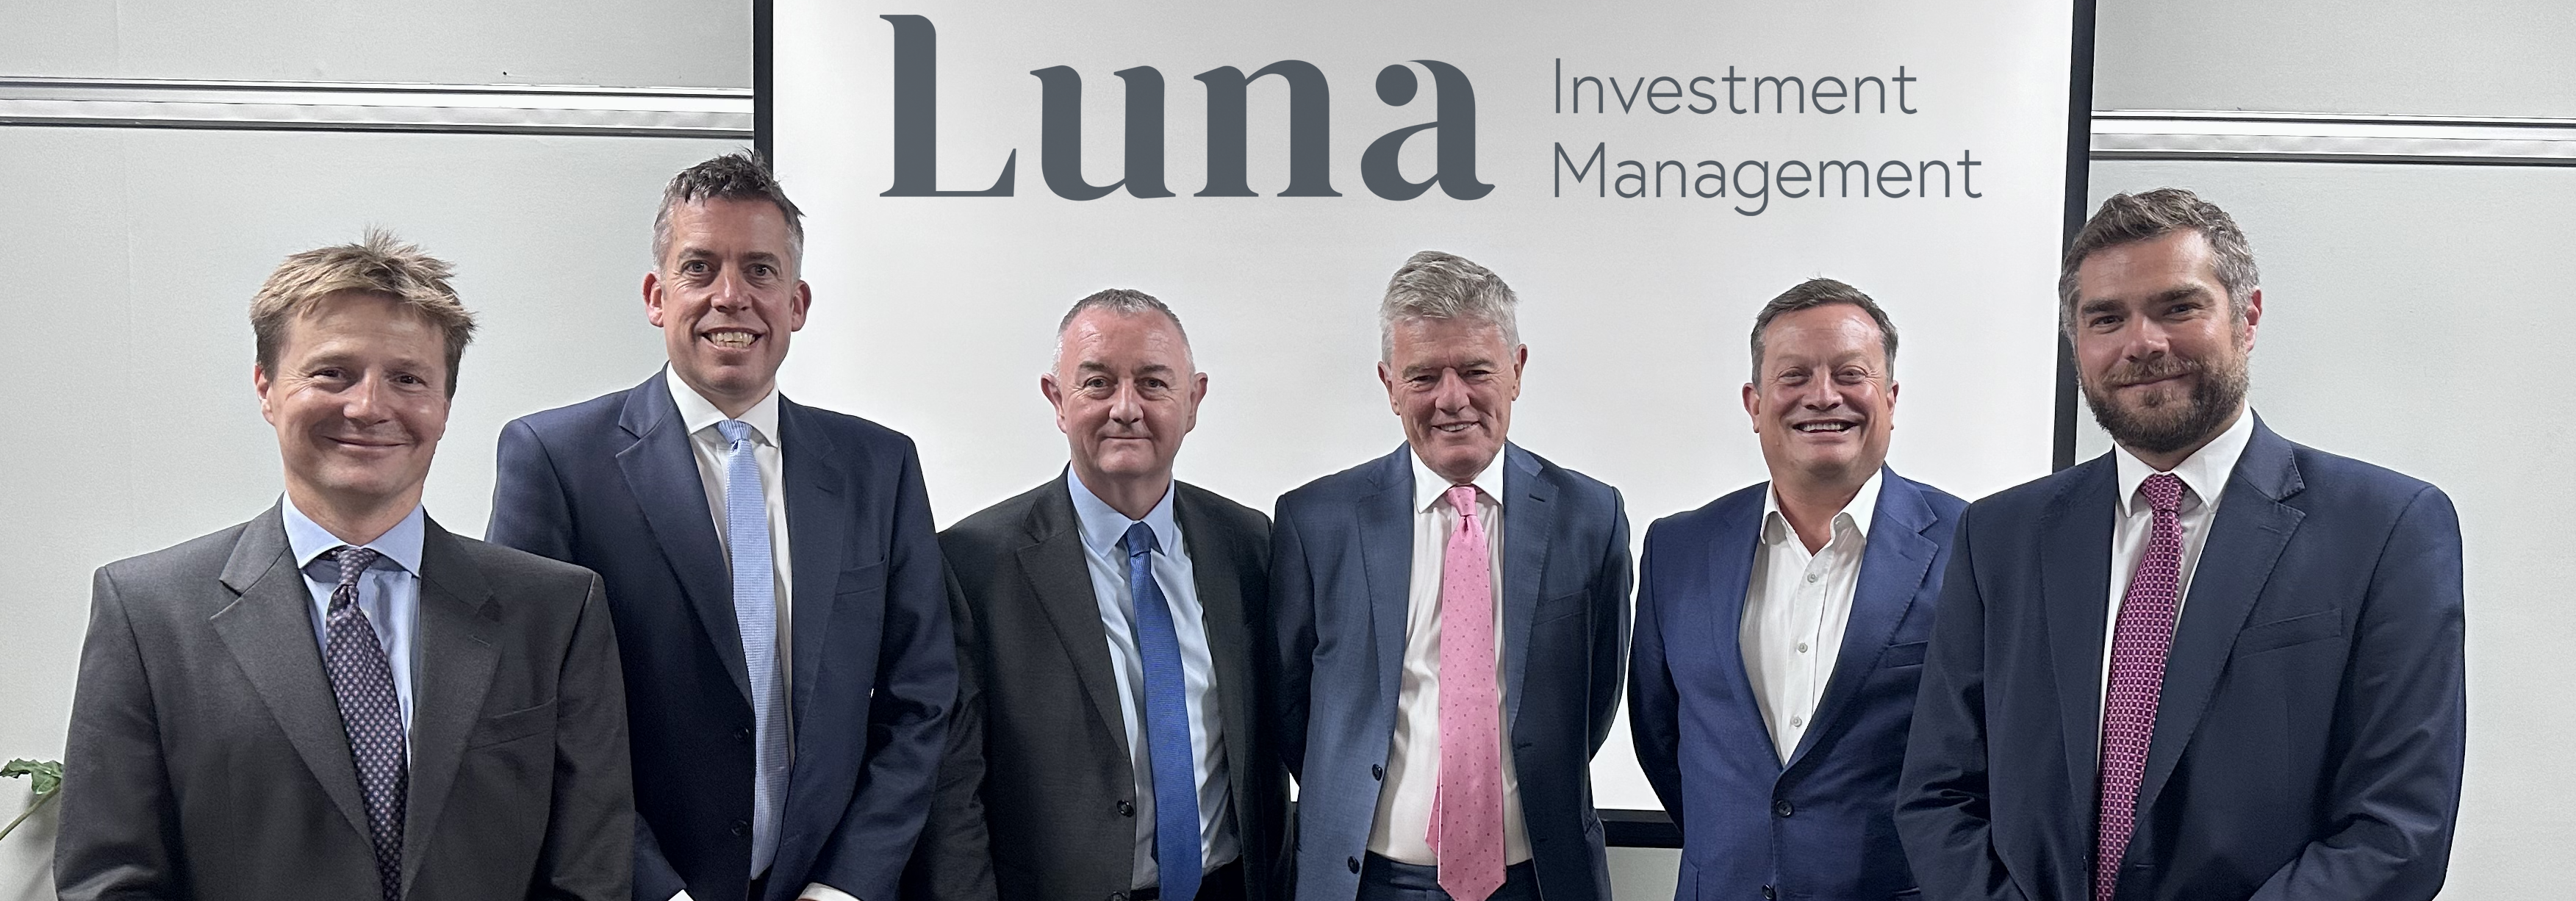 Luna Investment Update Event